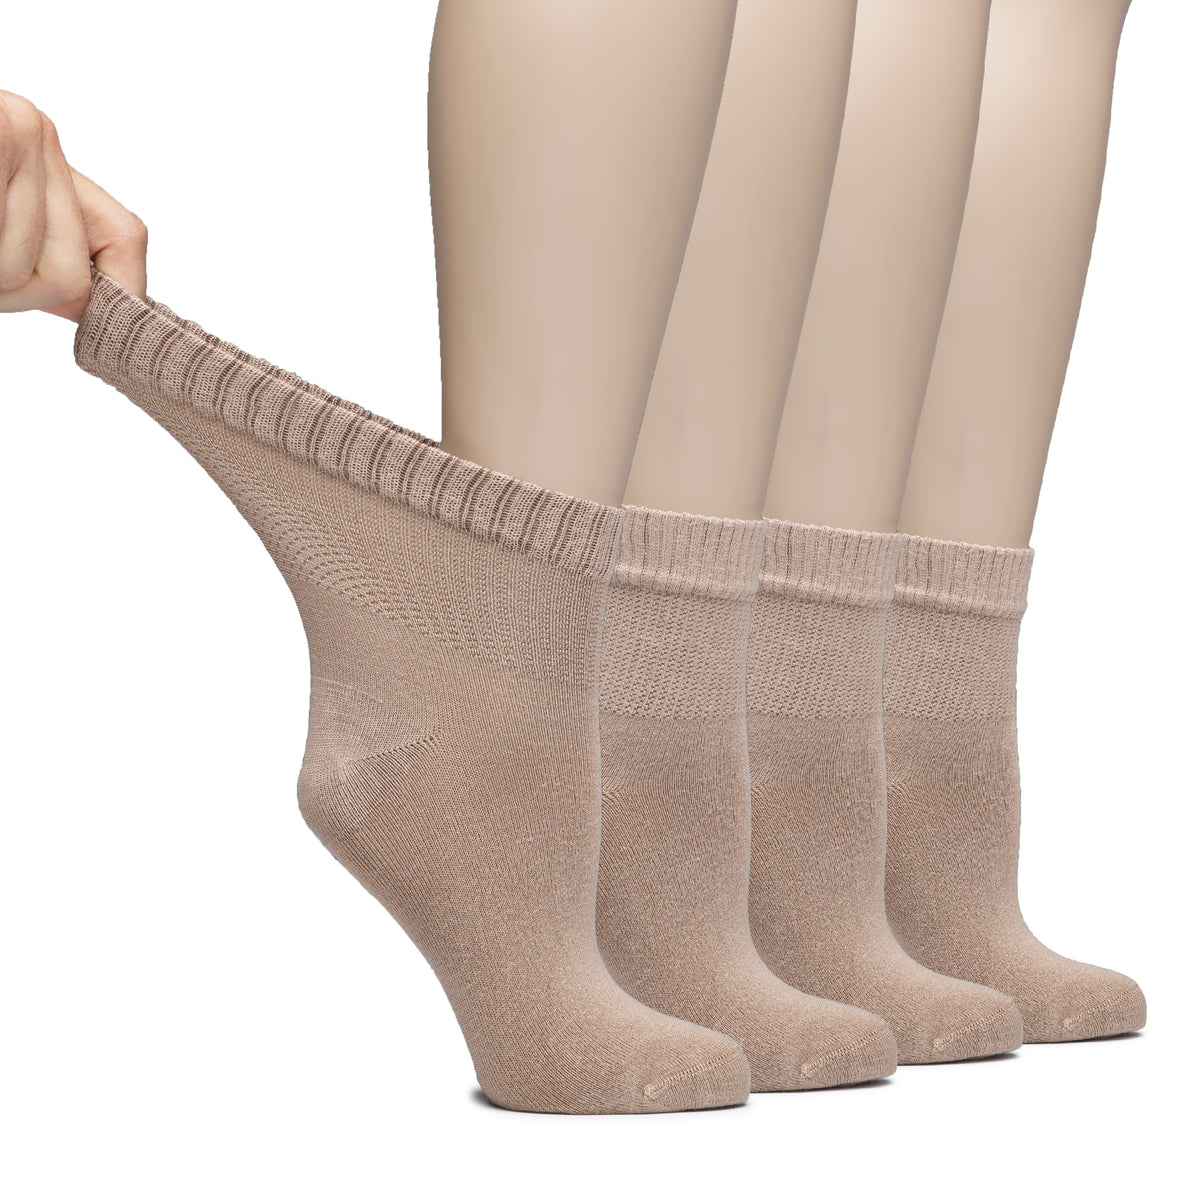 Hugh Ugoli Lightweight Women's Diabetic Ankle Socks Bamboo Thin Socks Seamless Toe and Non-Binding Top, 4 Pairs, , Shoe Size: 6-9/10-12 | Shoe Size: 6-9 | Blue